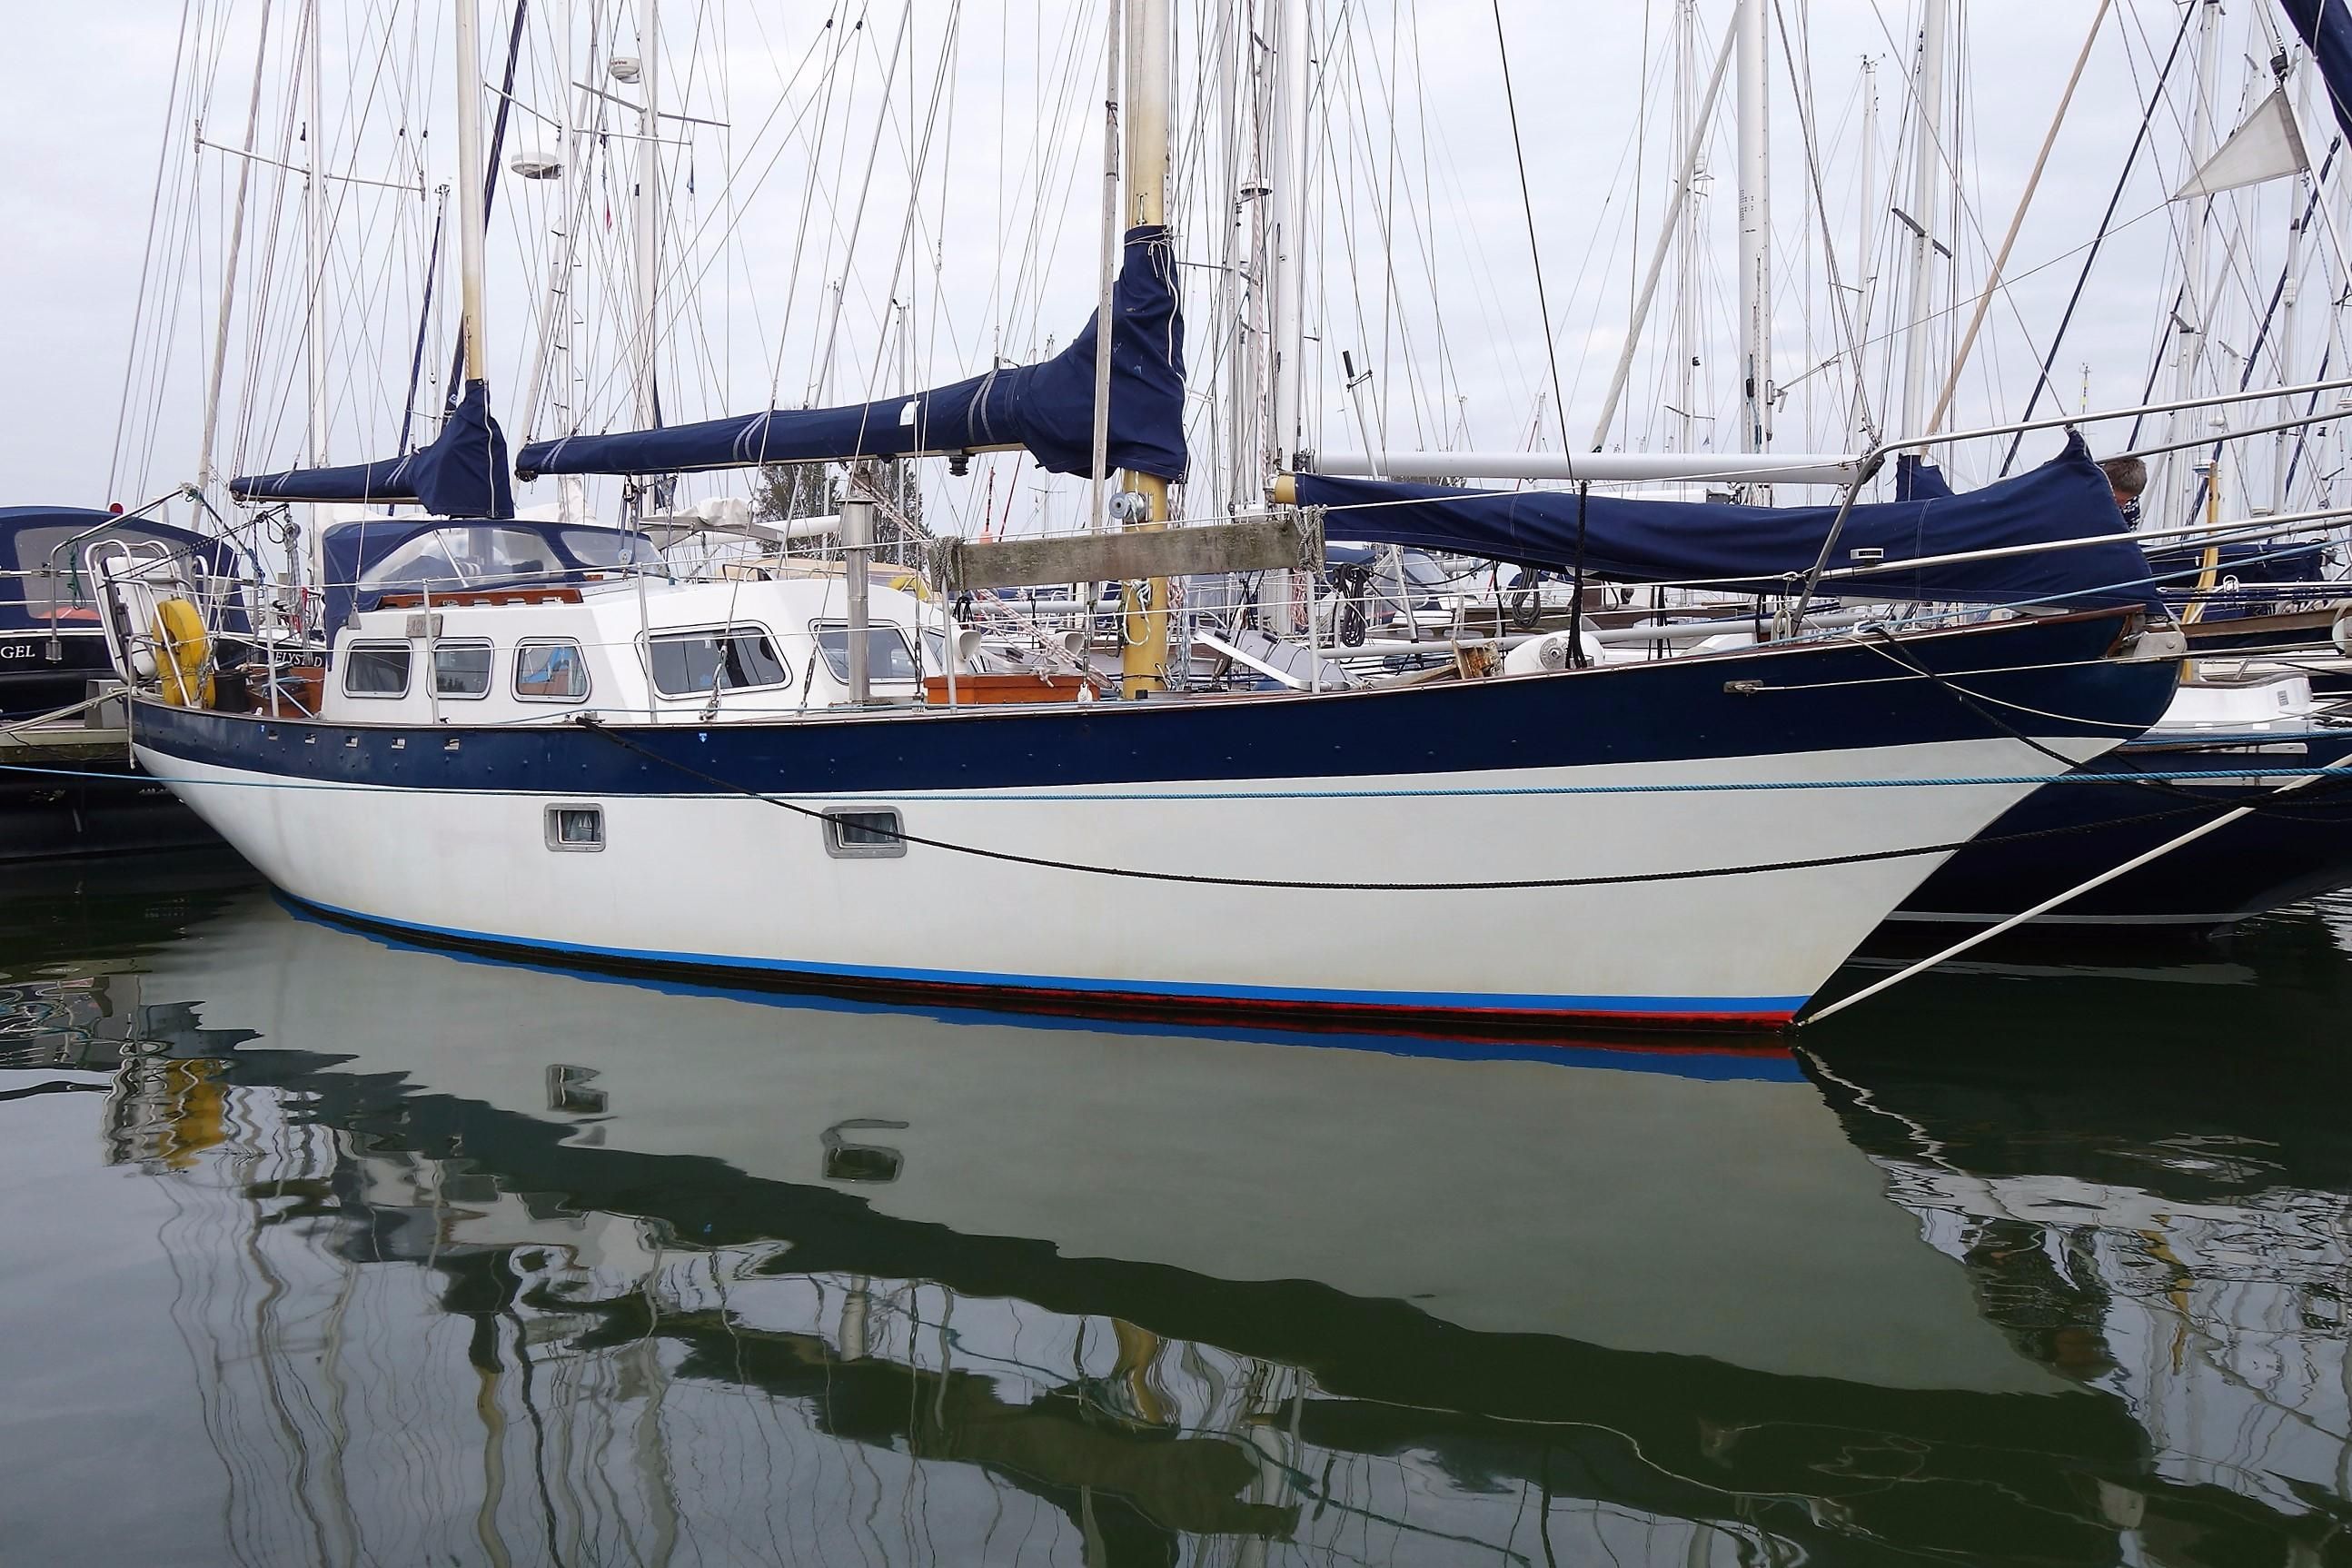 capri 25 sailboat for sale